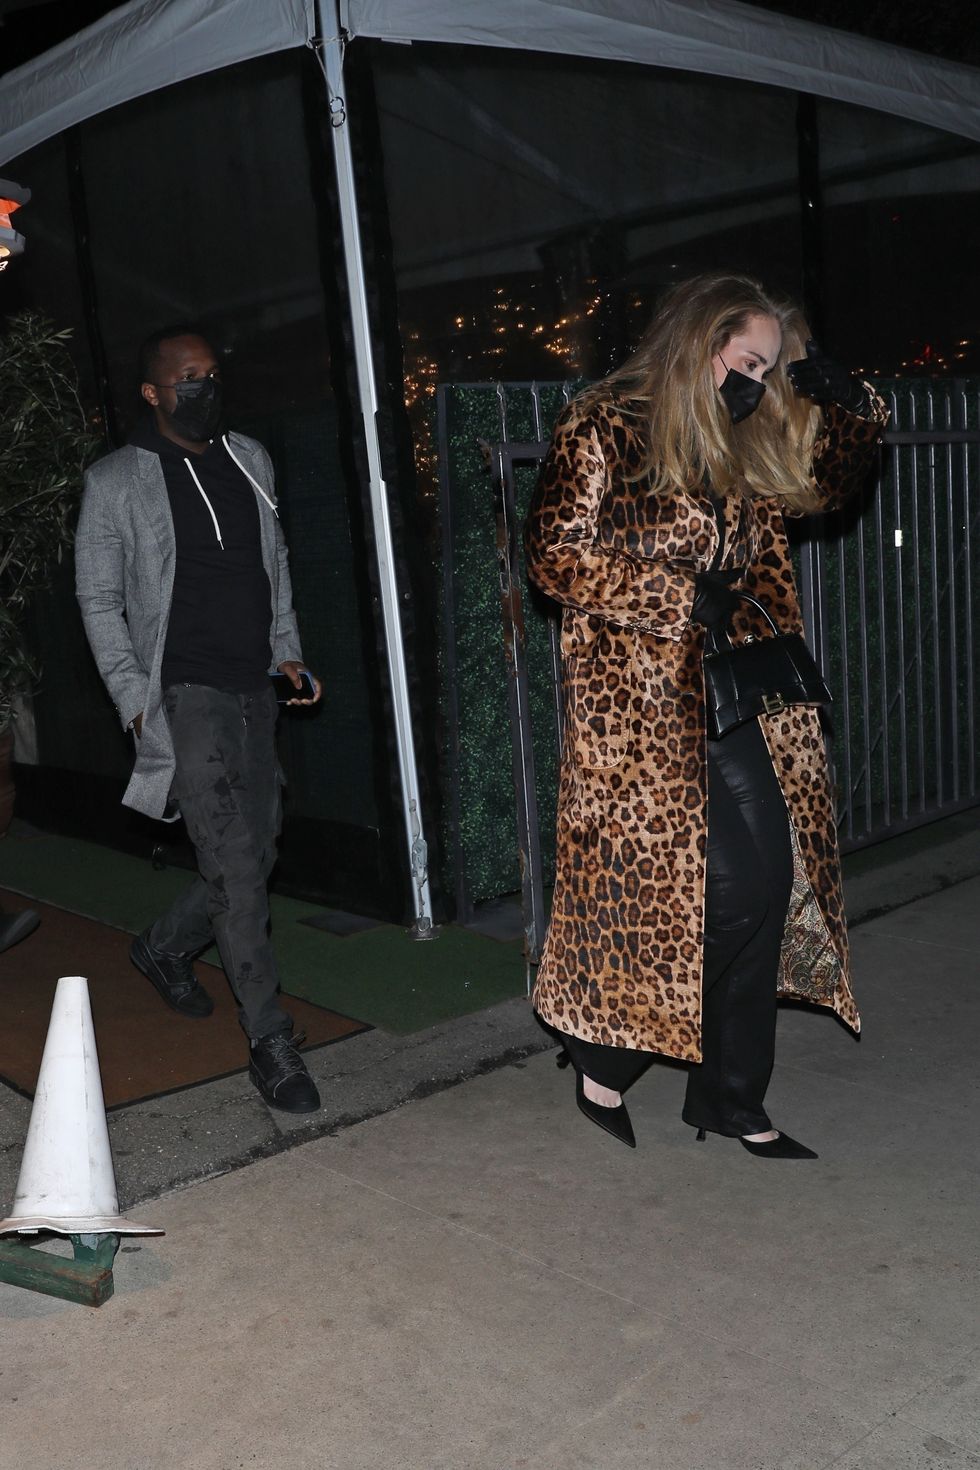 adele and rich paul walk outside, adele wears long cheetah print coat